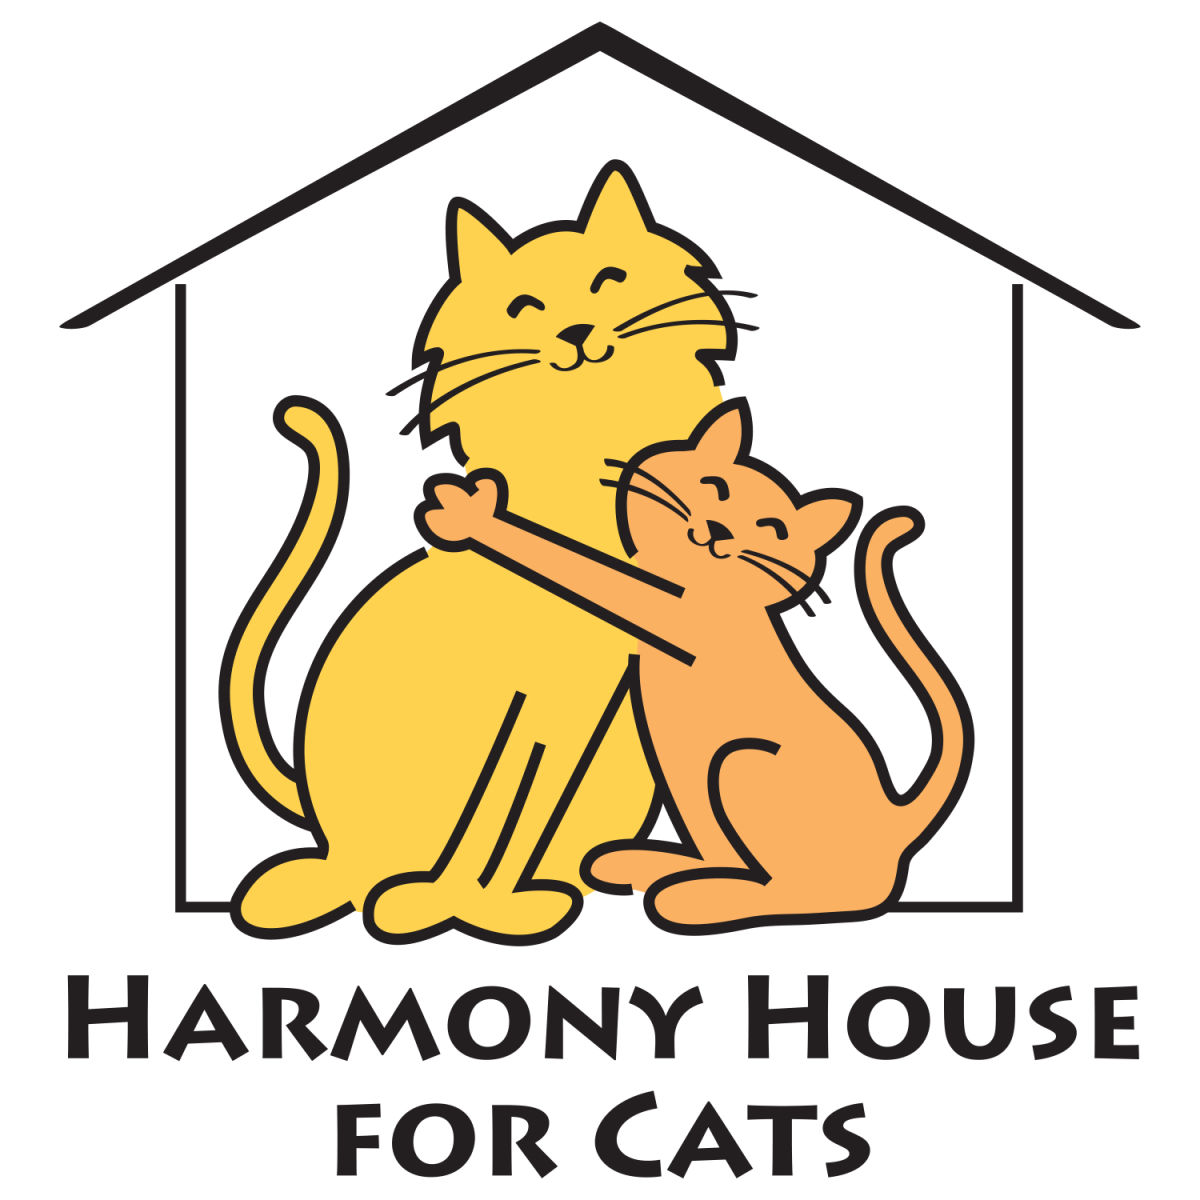 HARMONY HOUSE FOR CATS